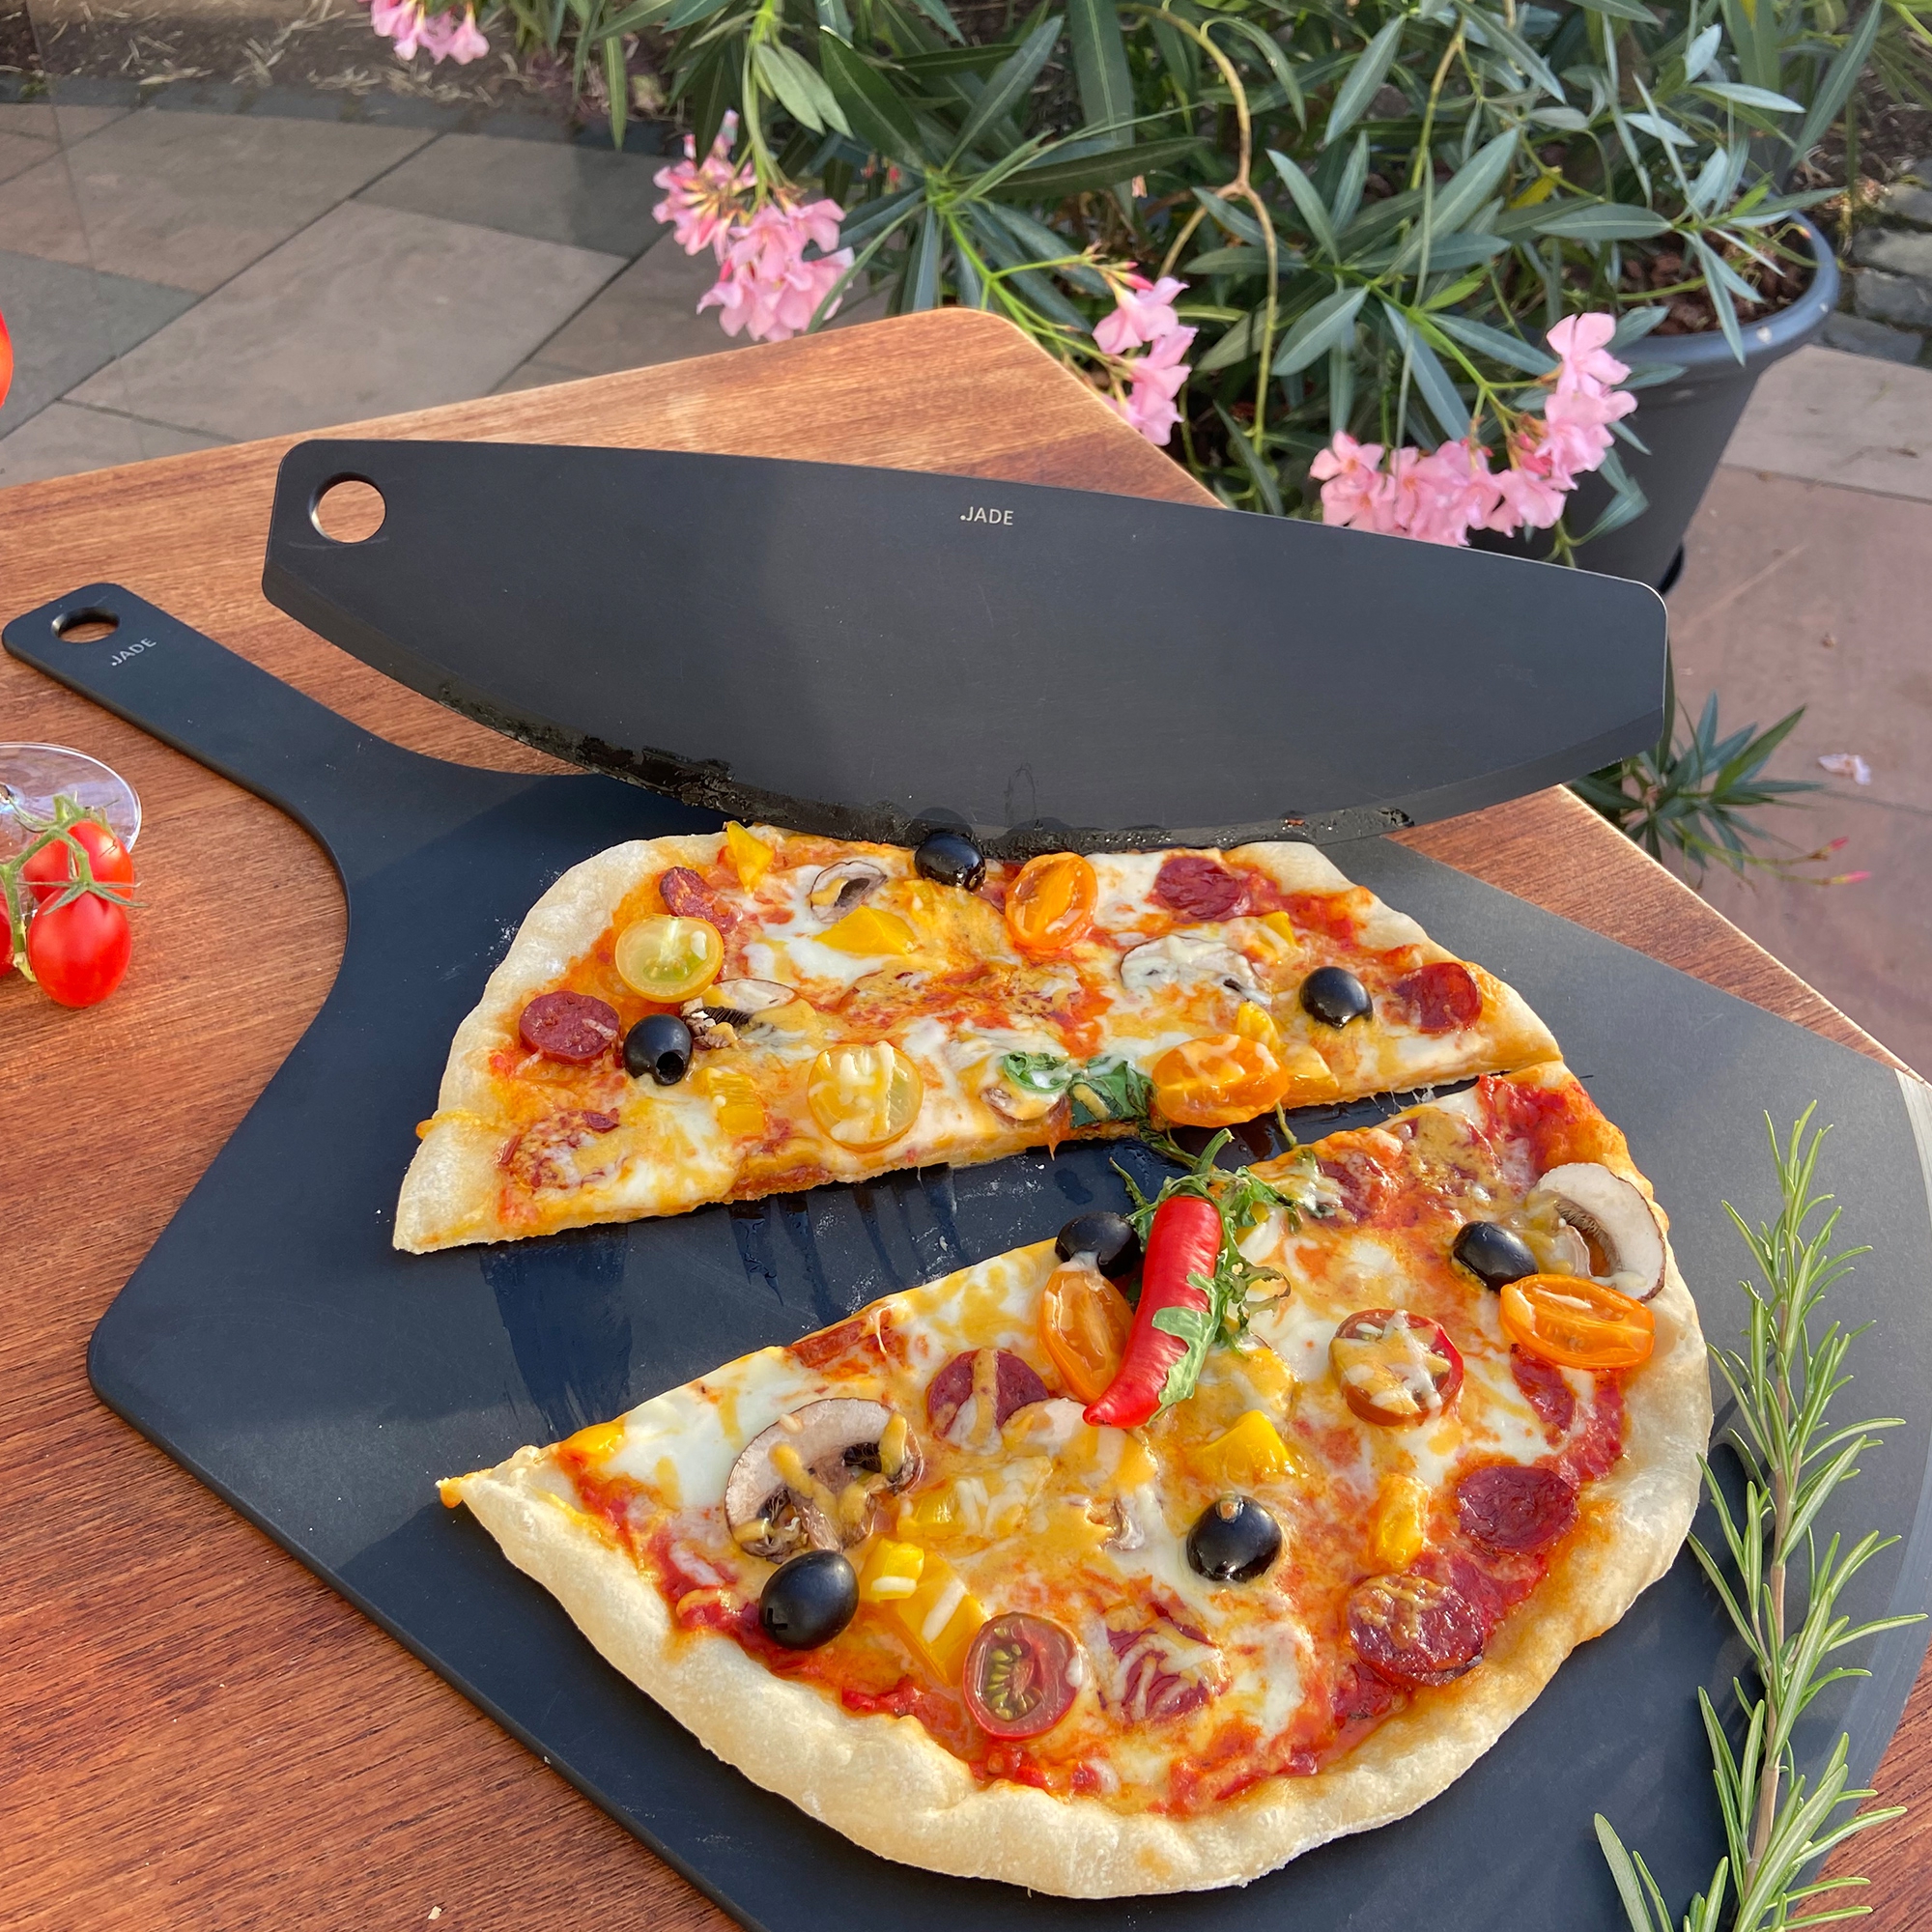 Jade - Serving/Cutting Board "Pizza"